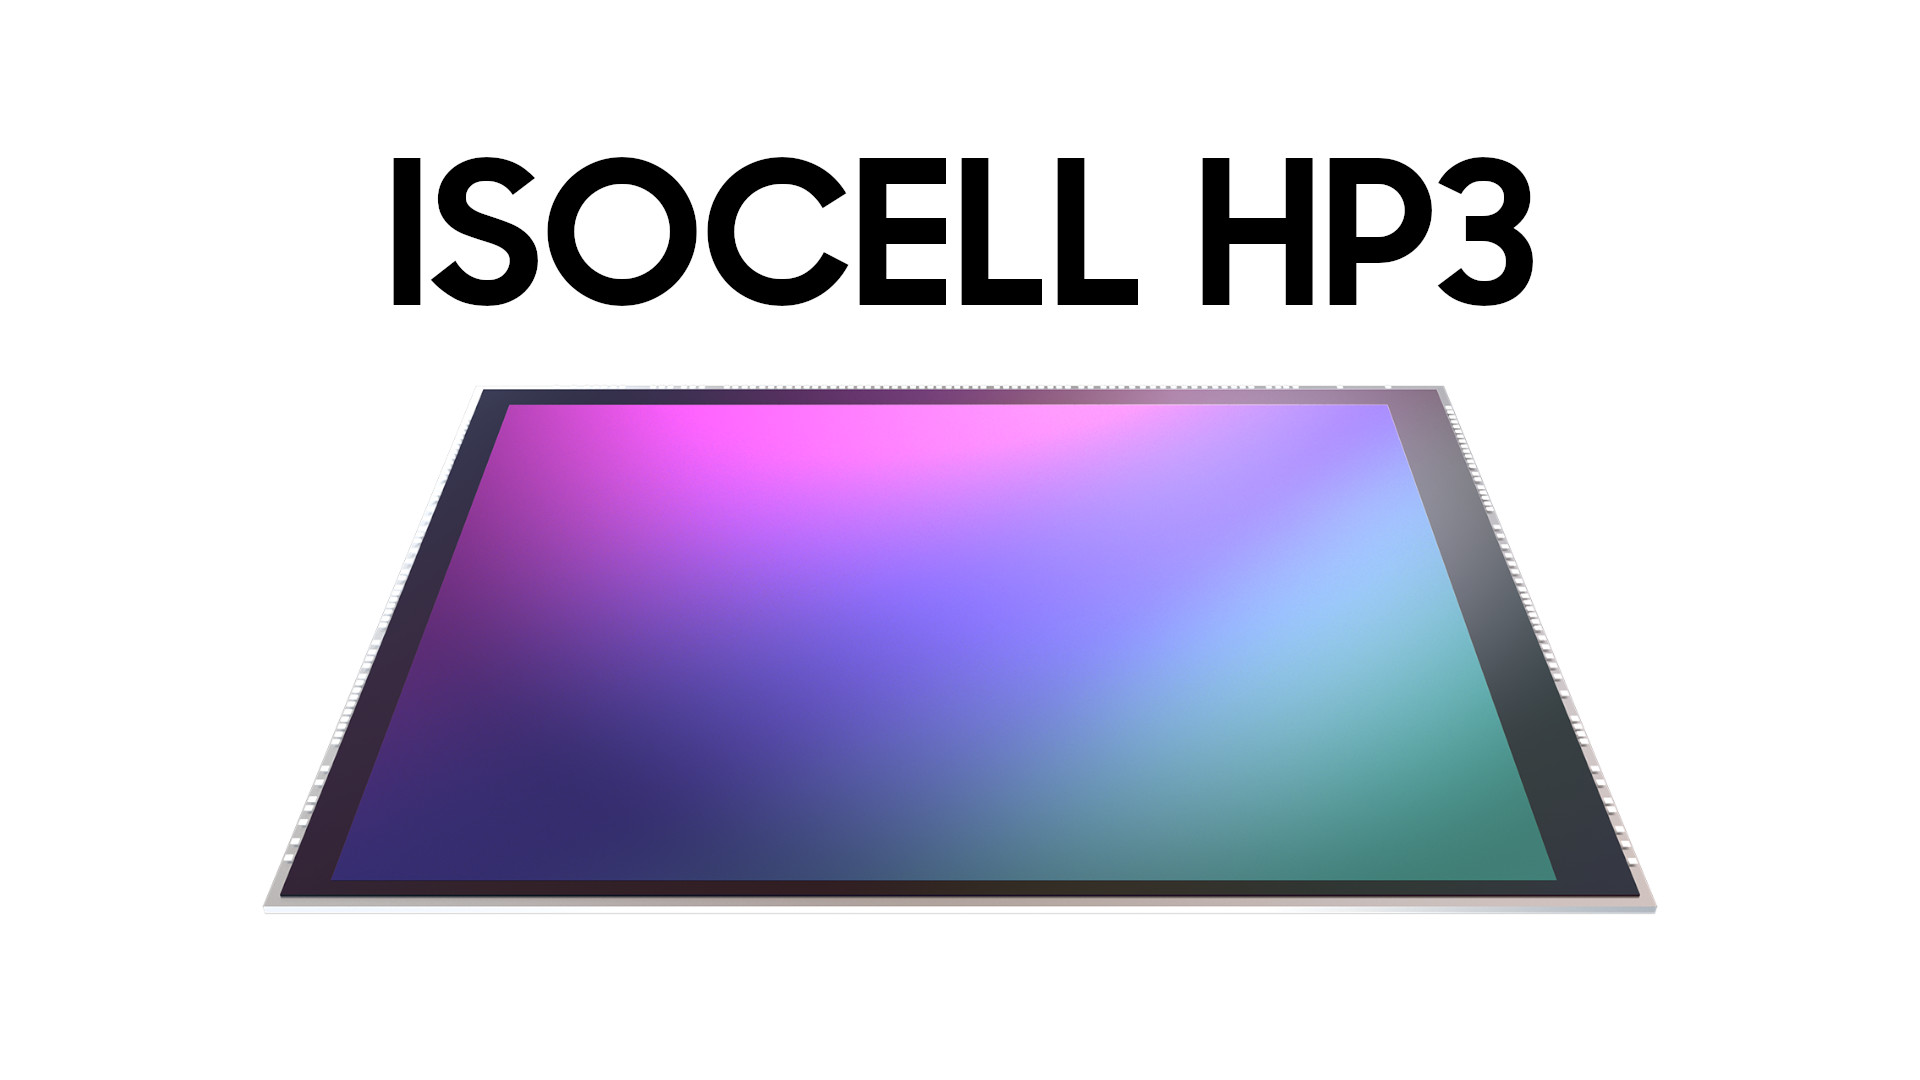 ISOCELL HP3 200MP sensor